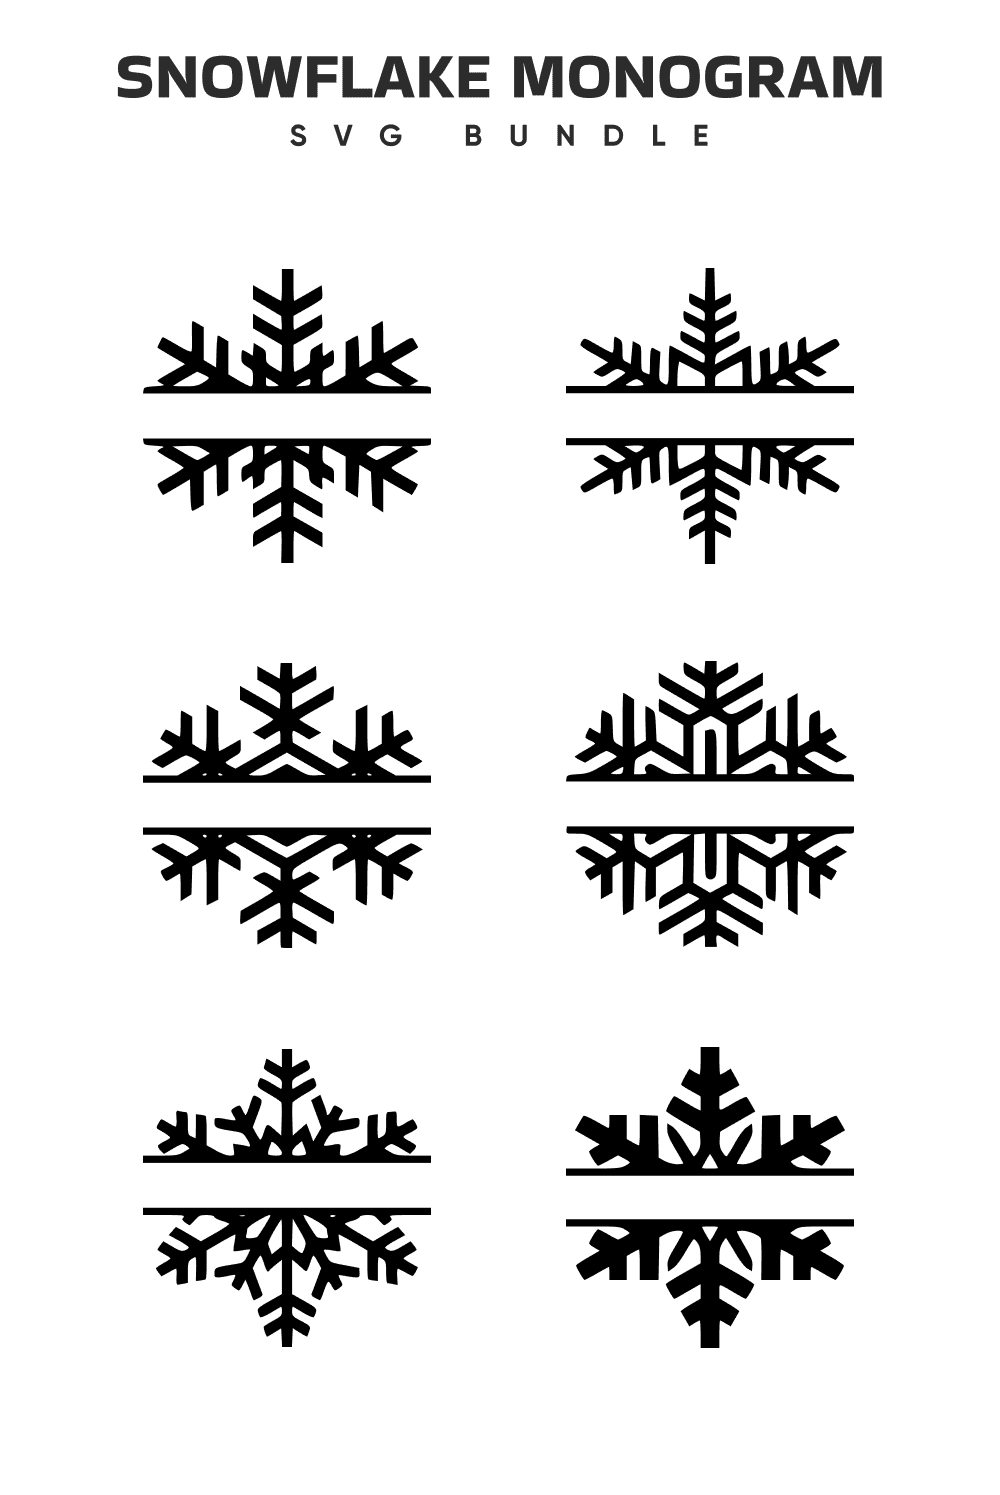 Snowflake Monogram SVG - pinterest image preview.